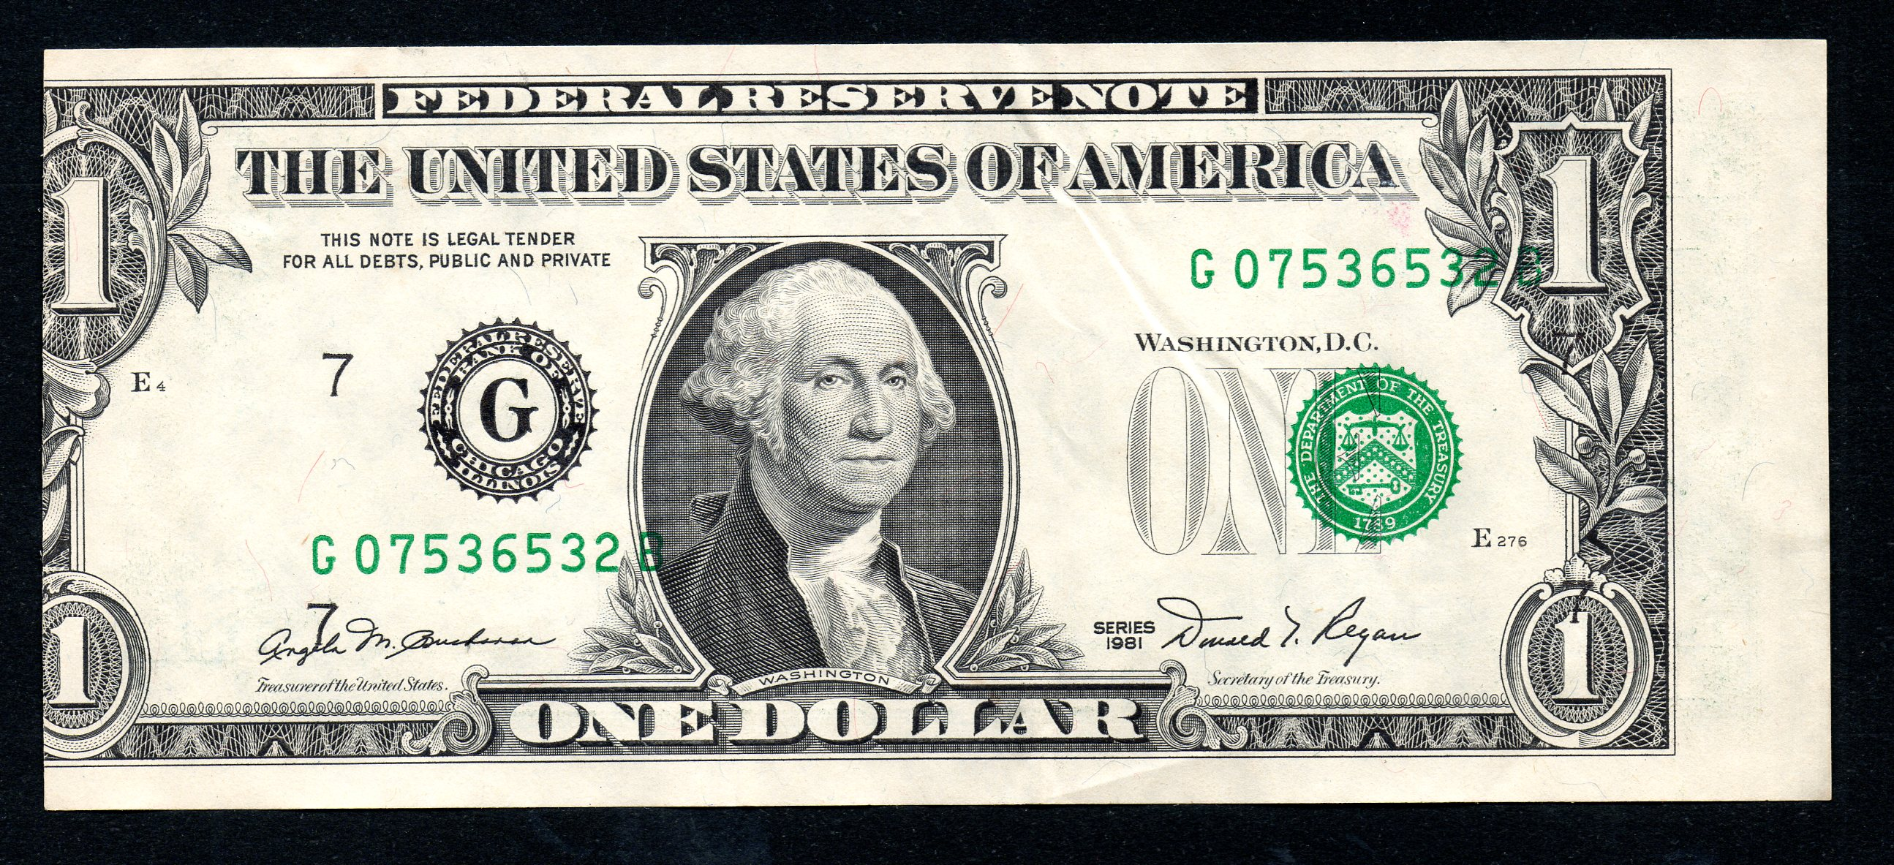 Один доллар сша банкнота. Купюра 1 доллар. Банкнота 1 доллар США. 1 Доллар США бумажный. Доллар купюра 1 доллар.